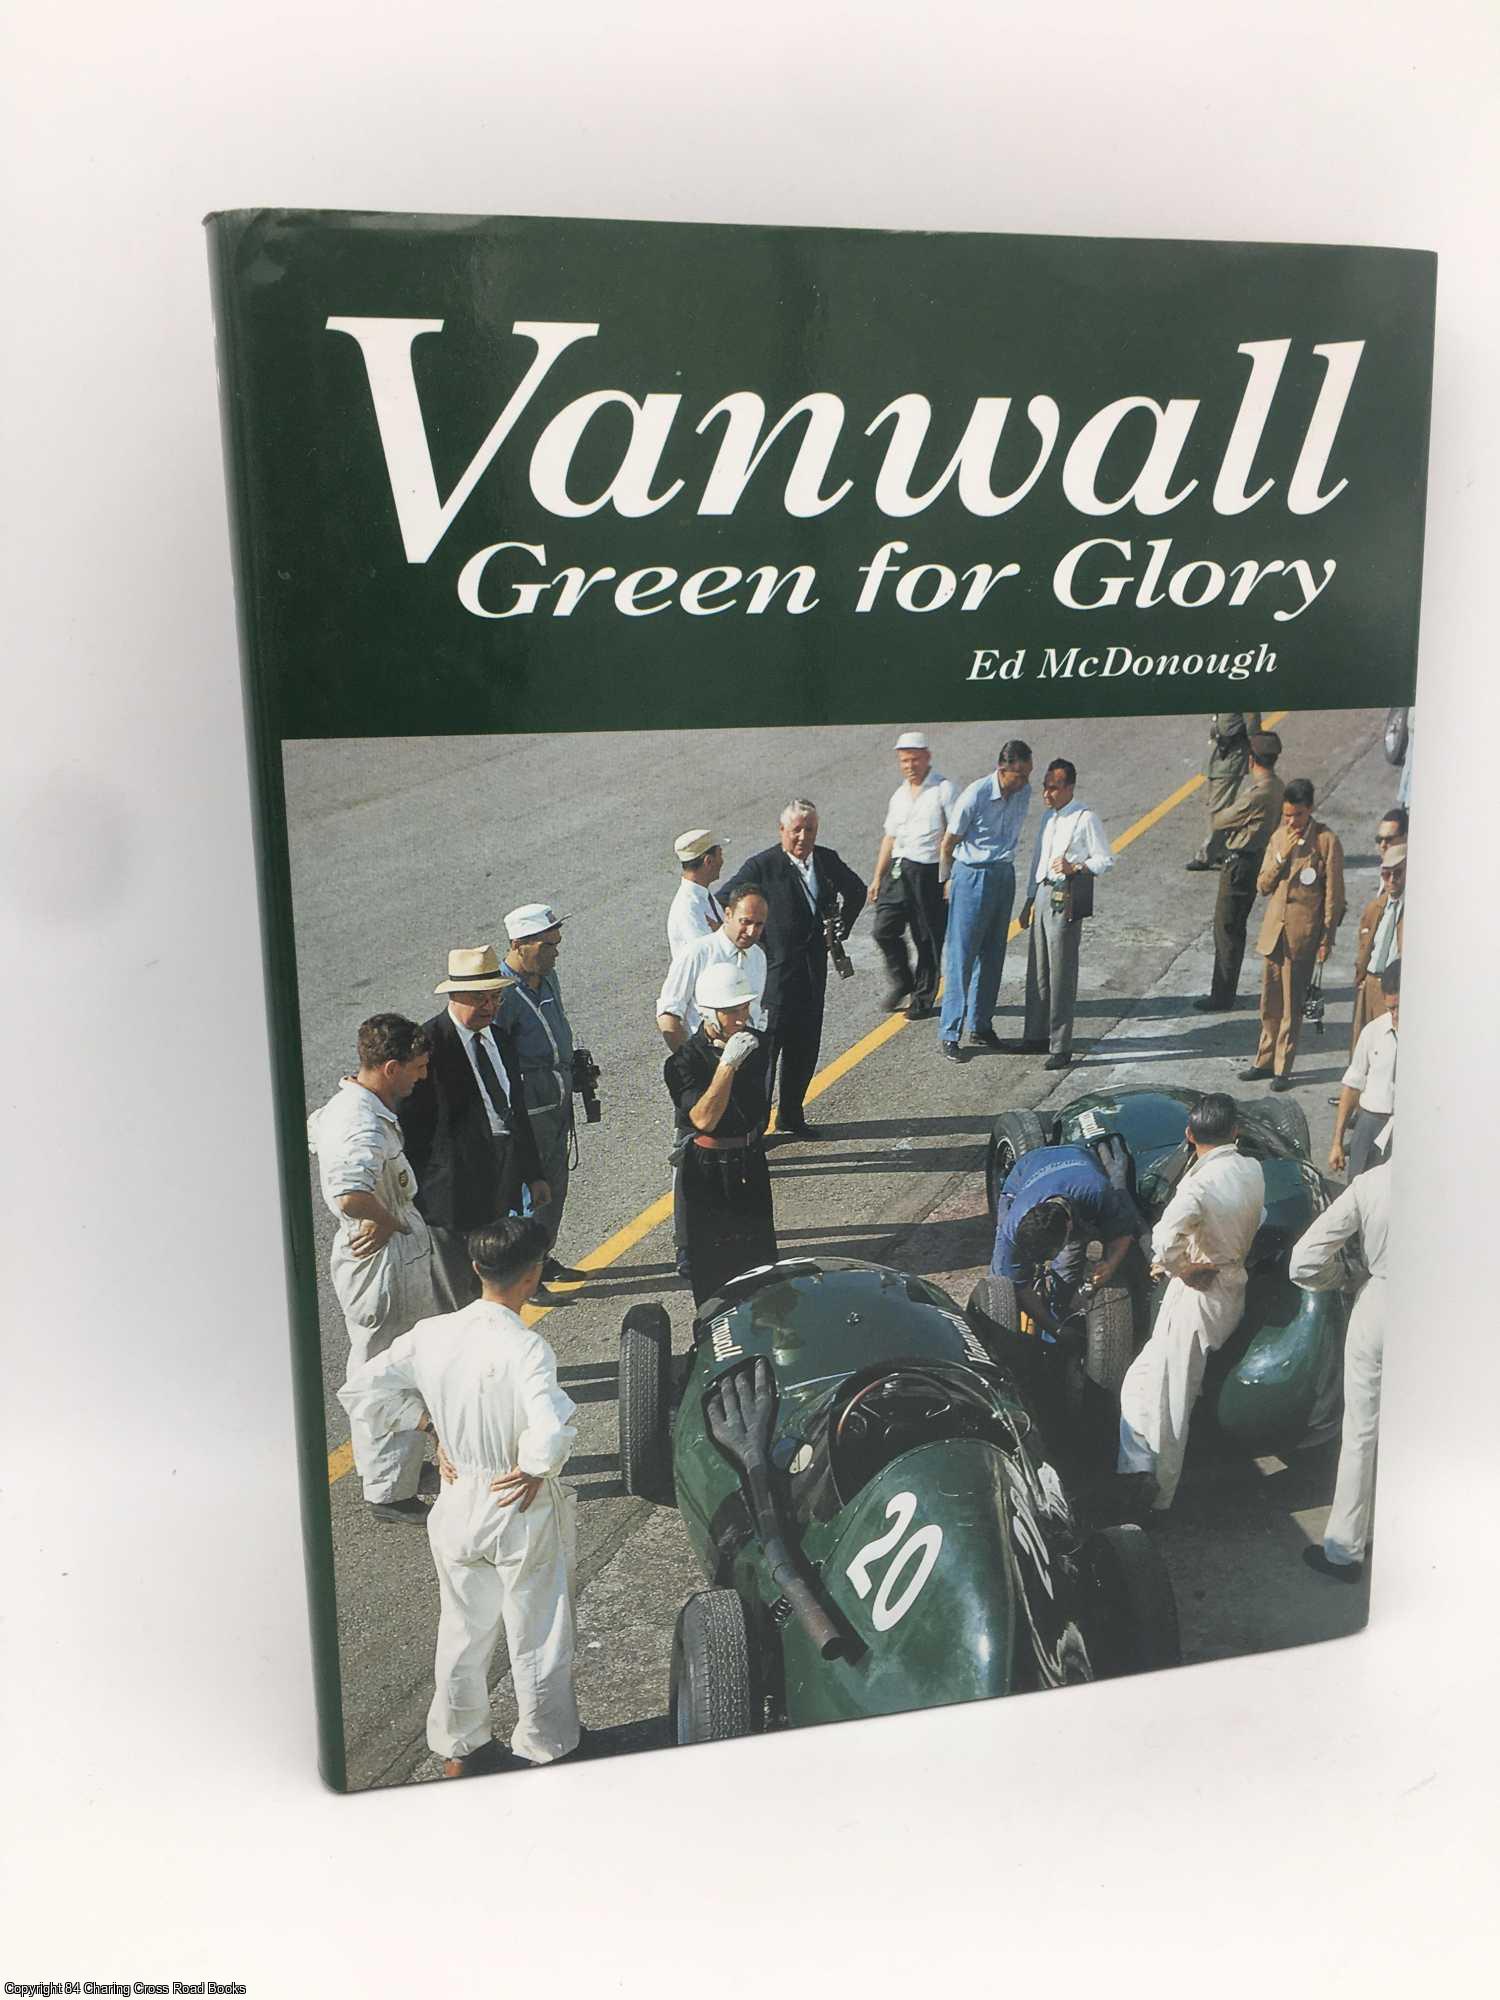 McDonough, Ed - Vanwall: Green for Glory